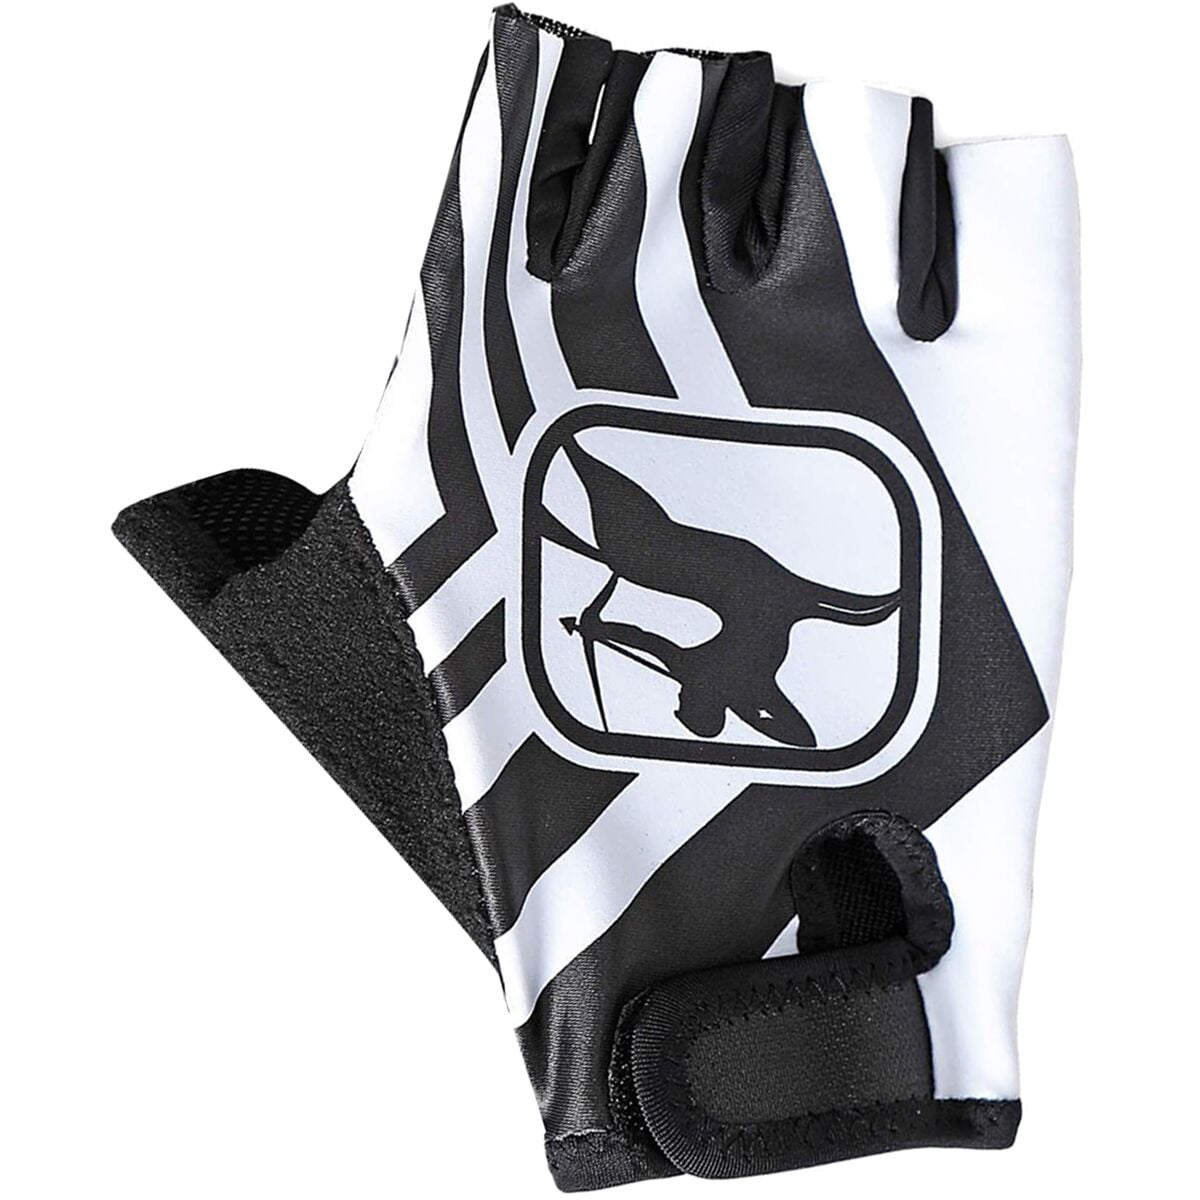 Giordana Tenax Pro Glove - Men's